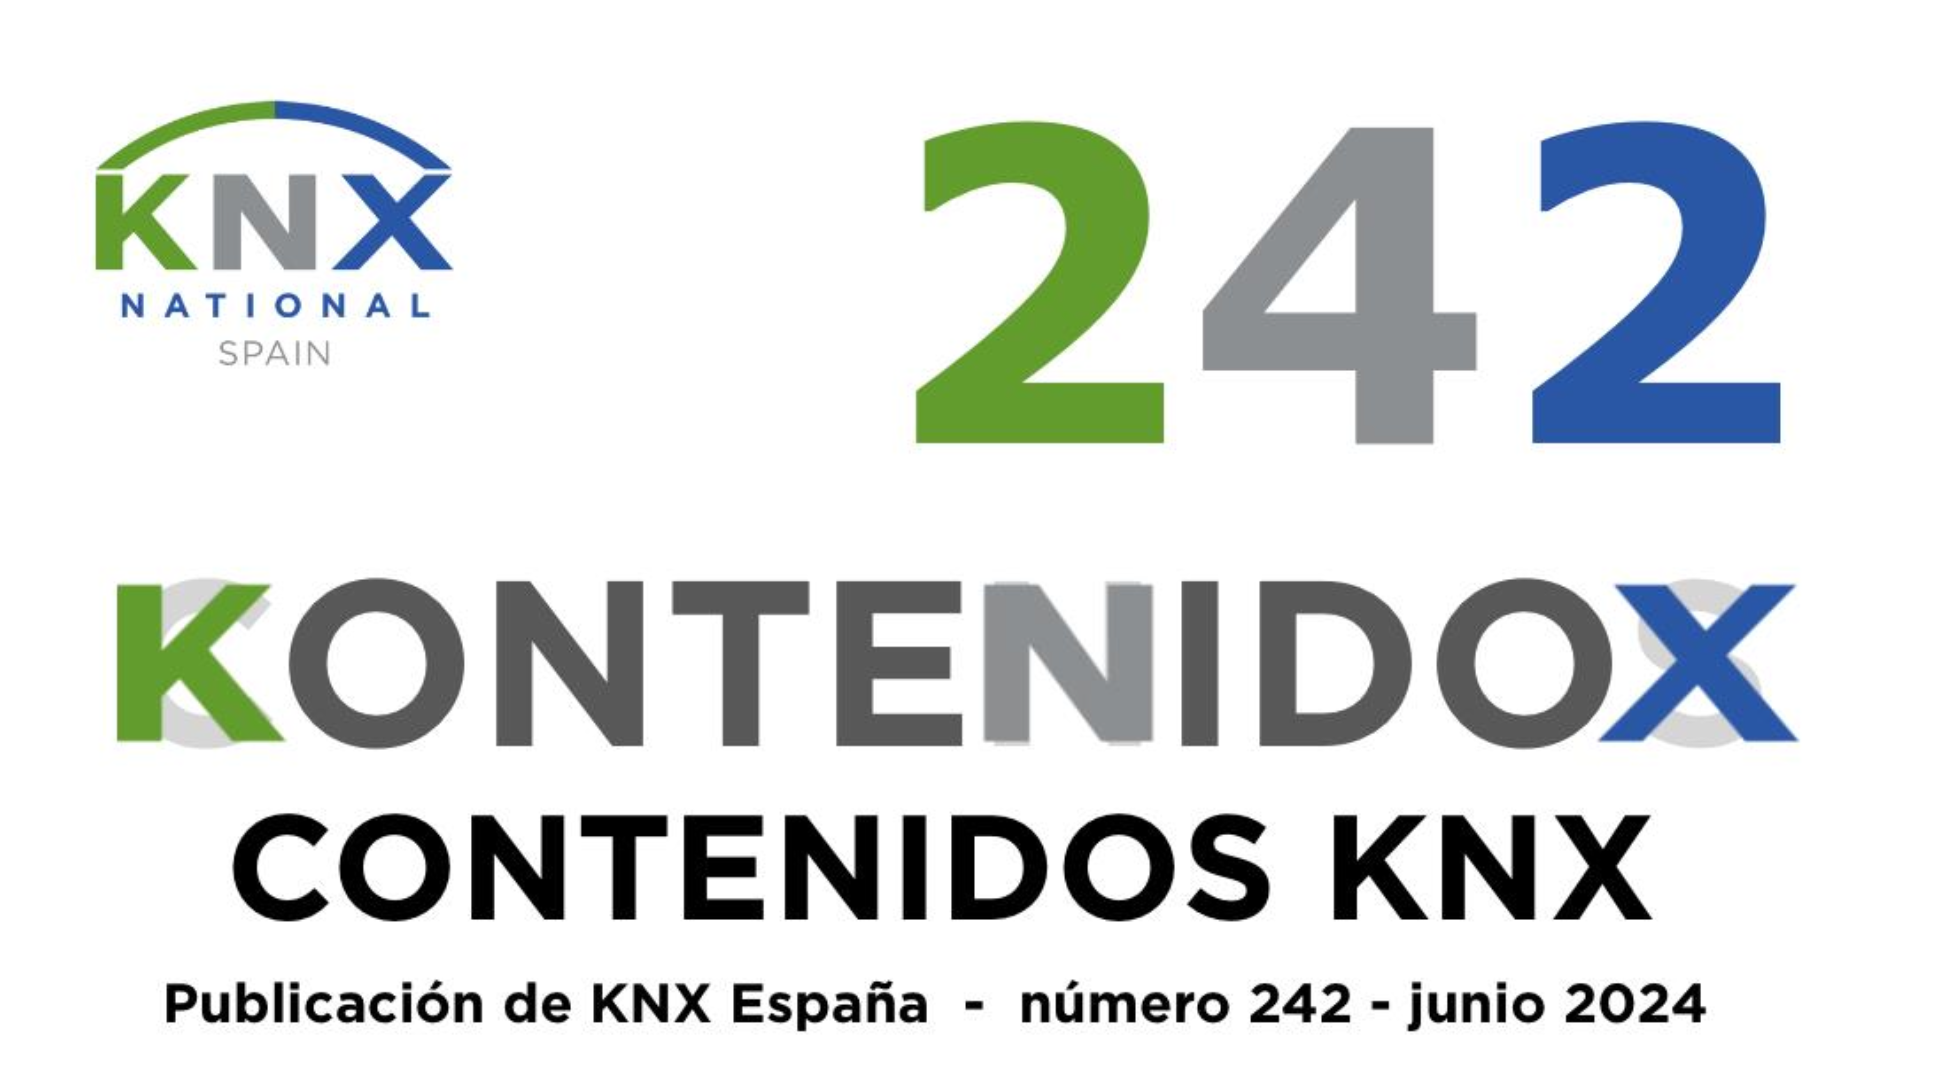 KONTENIDOX 242 - Contenidos KNX